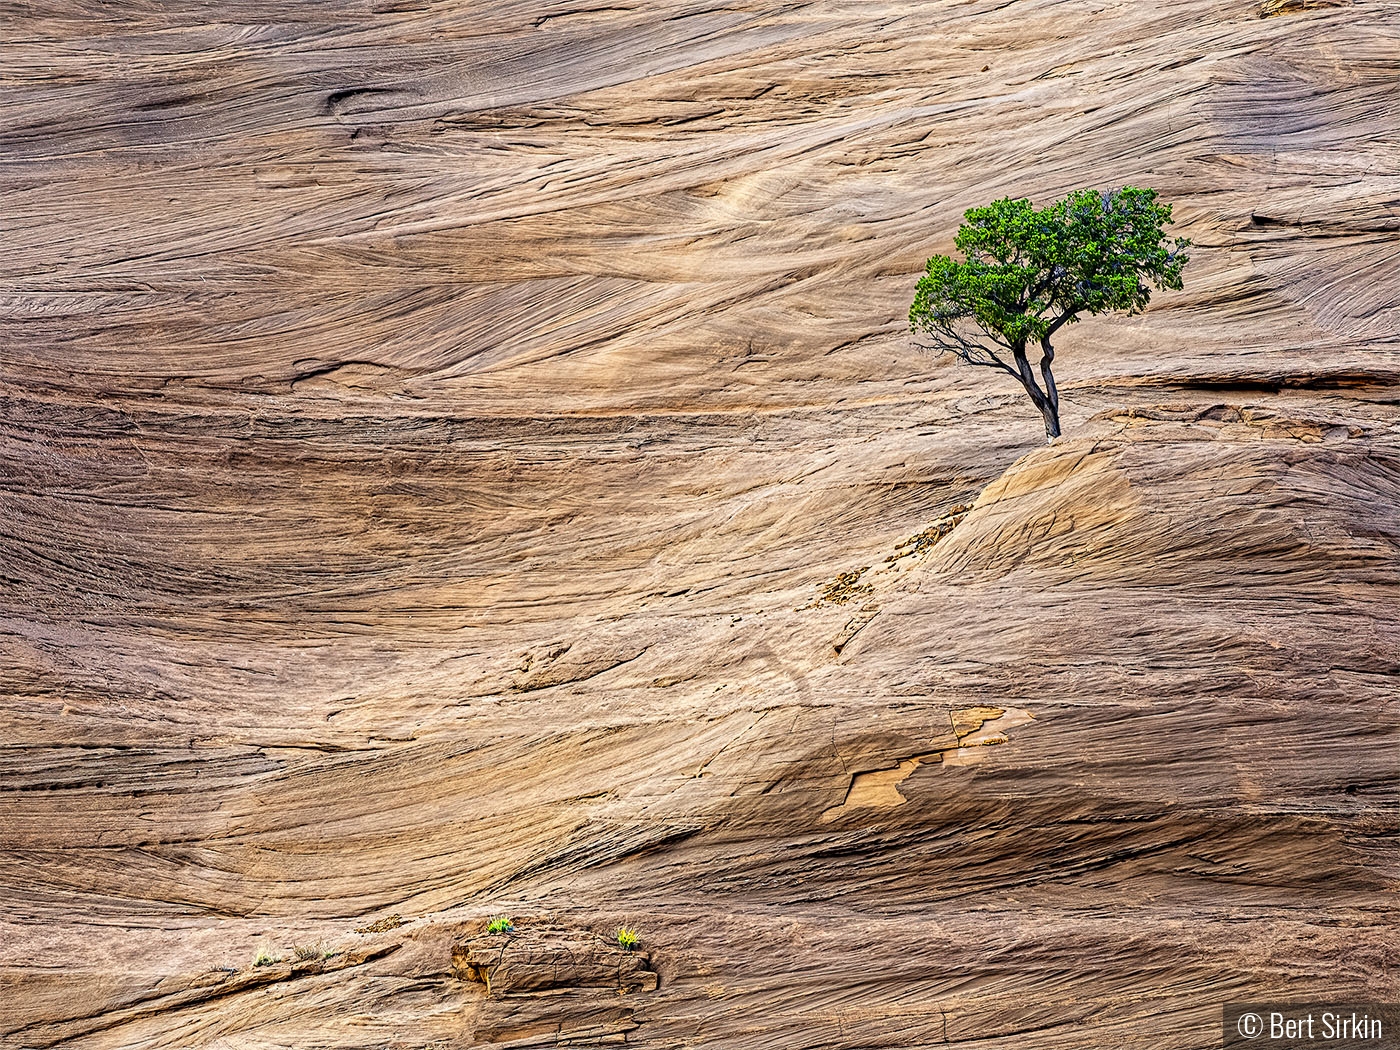 Tree with rock striations by Bert Sirkin